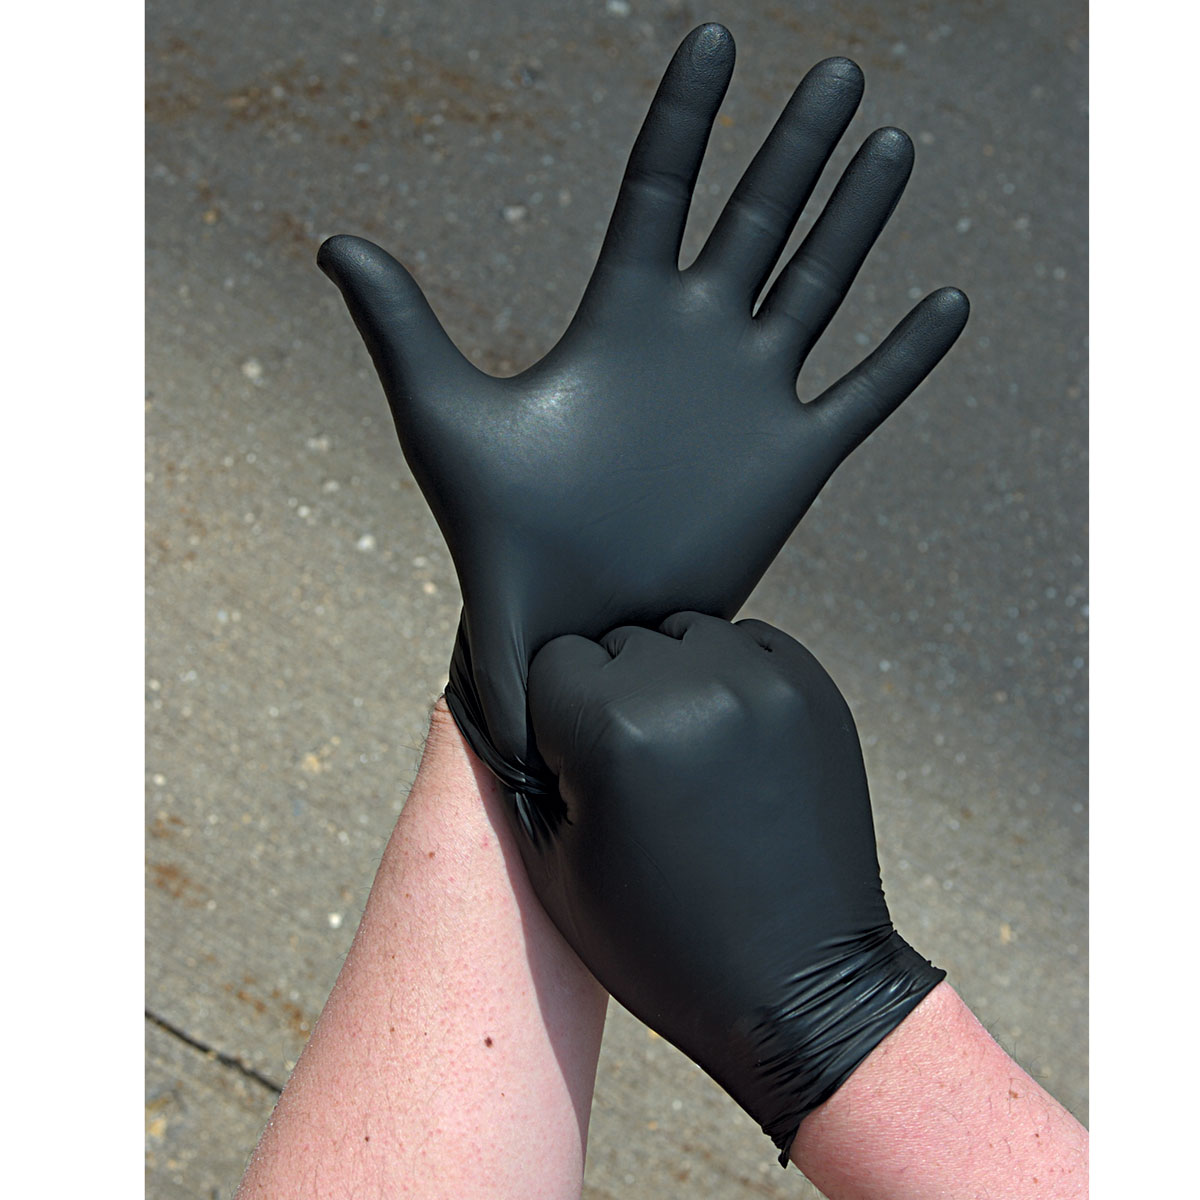 Gloves Black Nitrile Powder Free X-Large 5-6mil10/100ct GPNB - Sold by EA